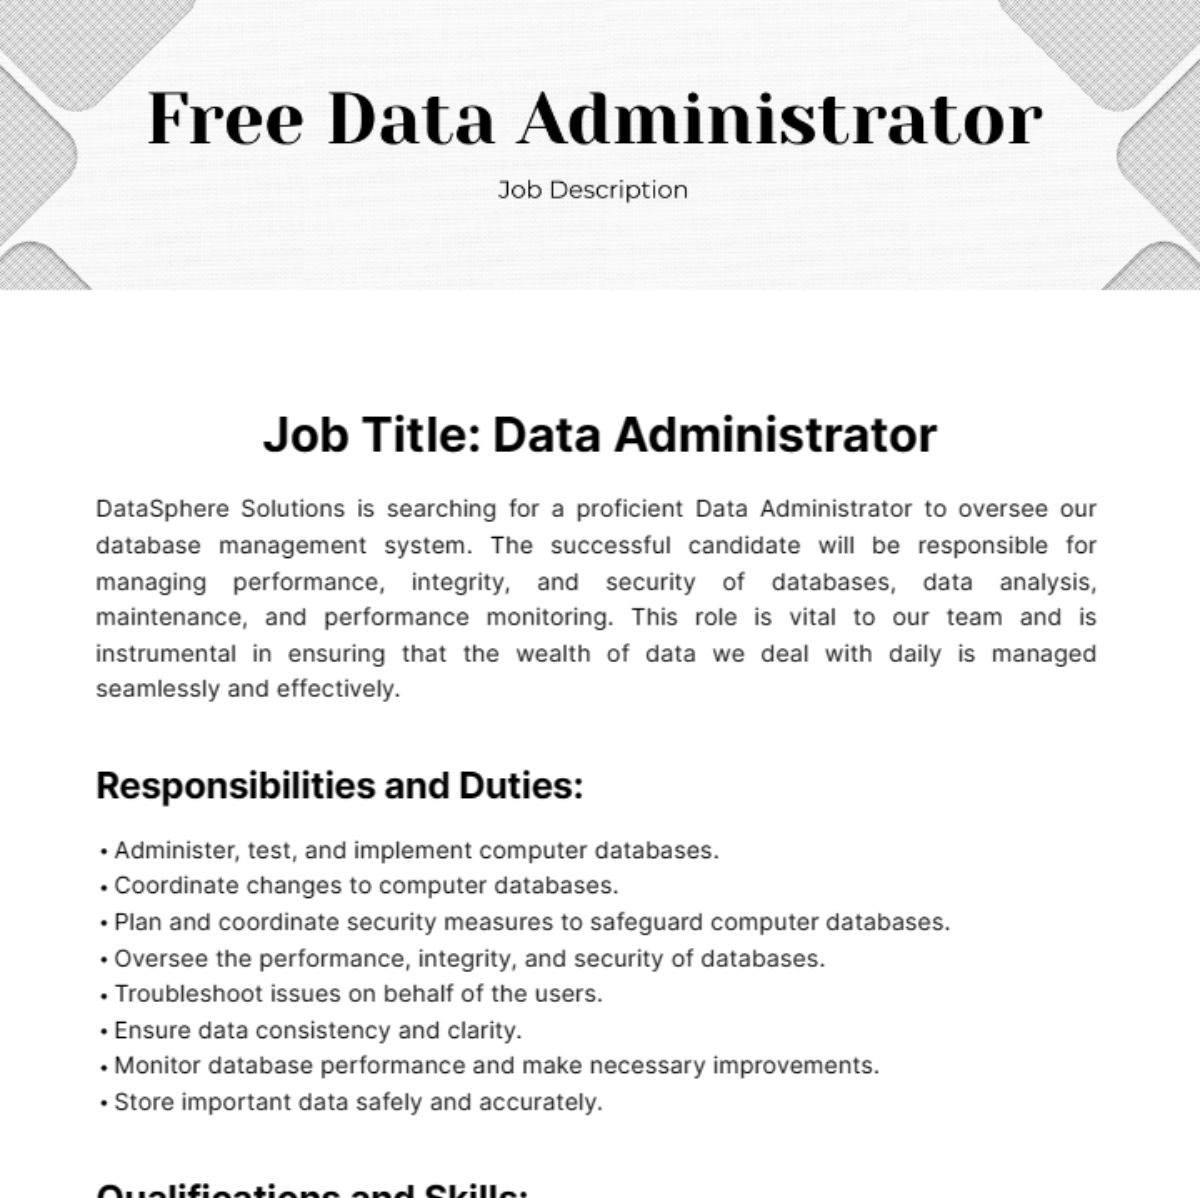 Free Data Administrator Job Description Template